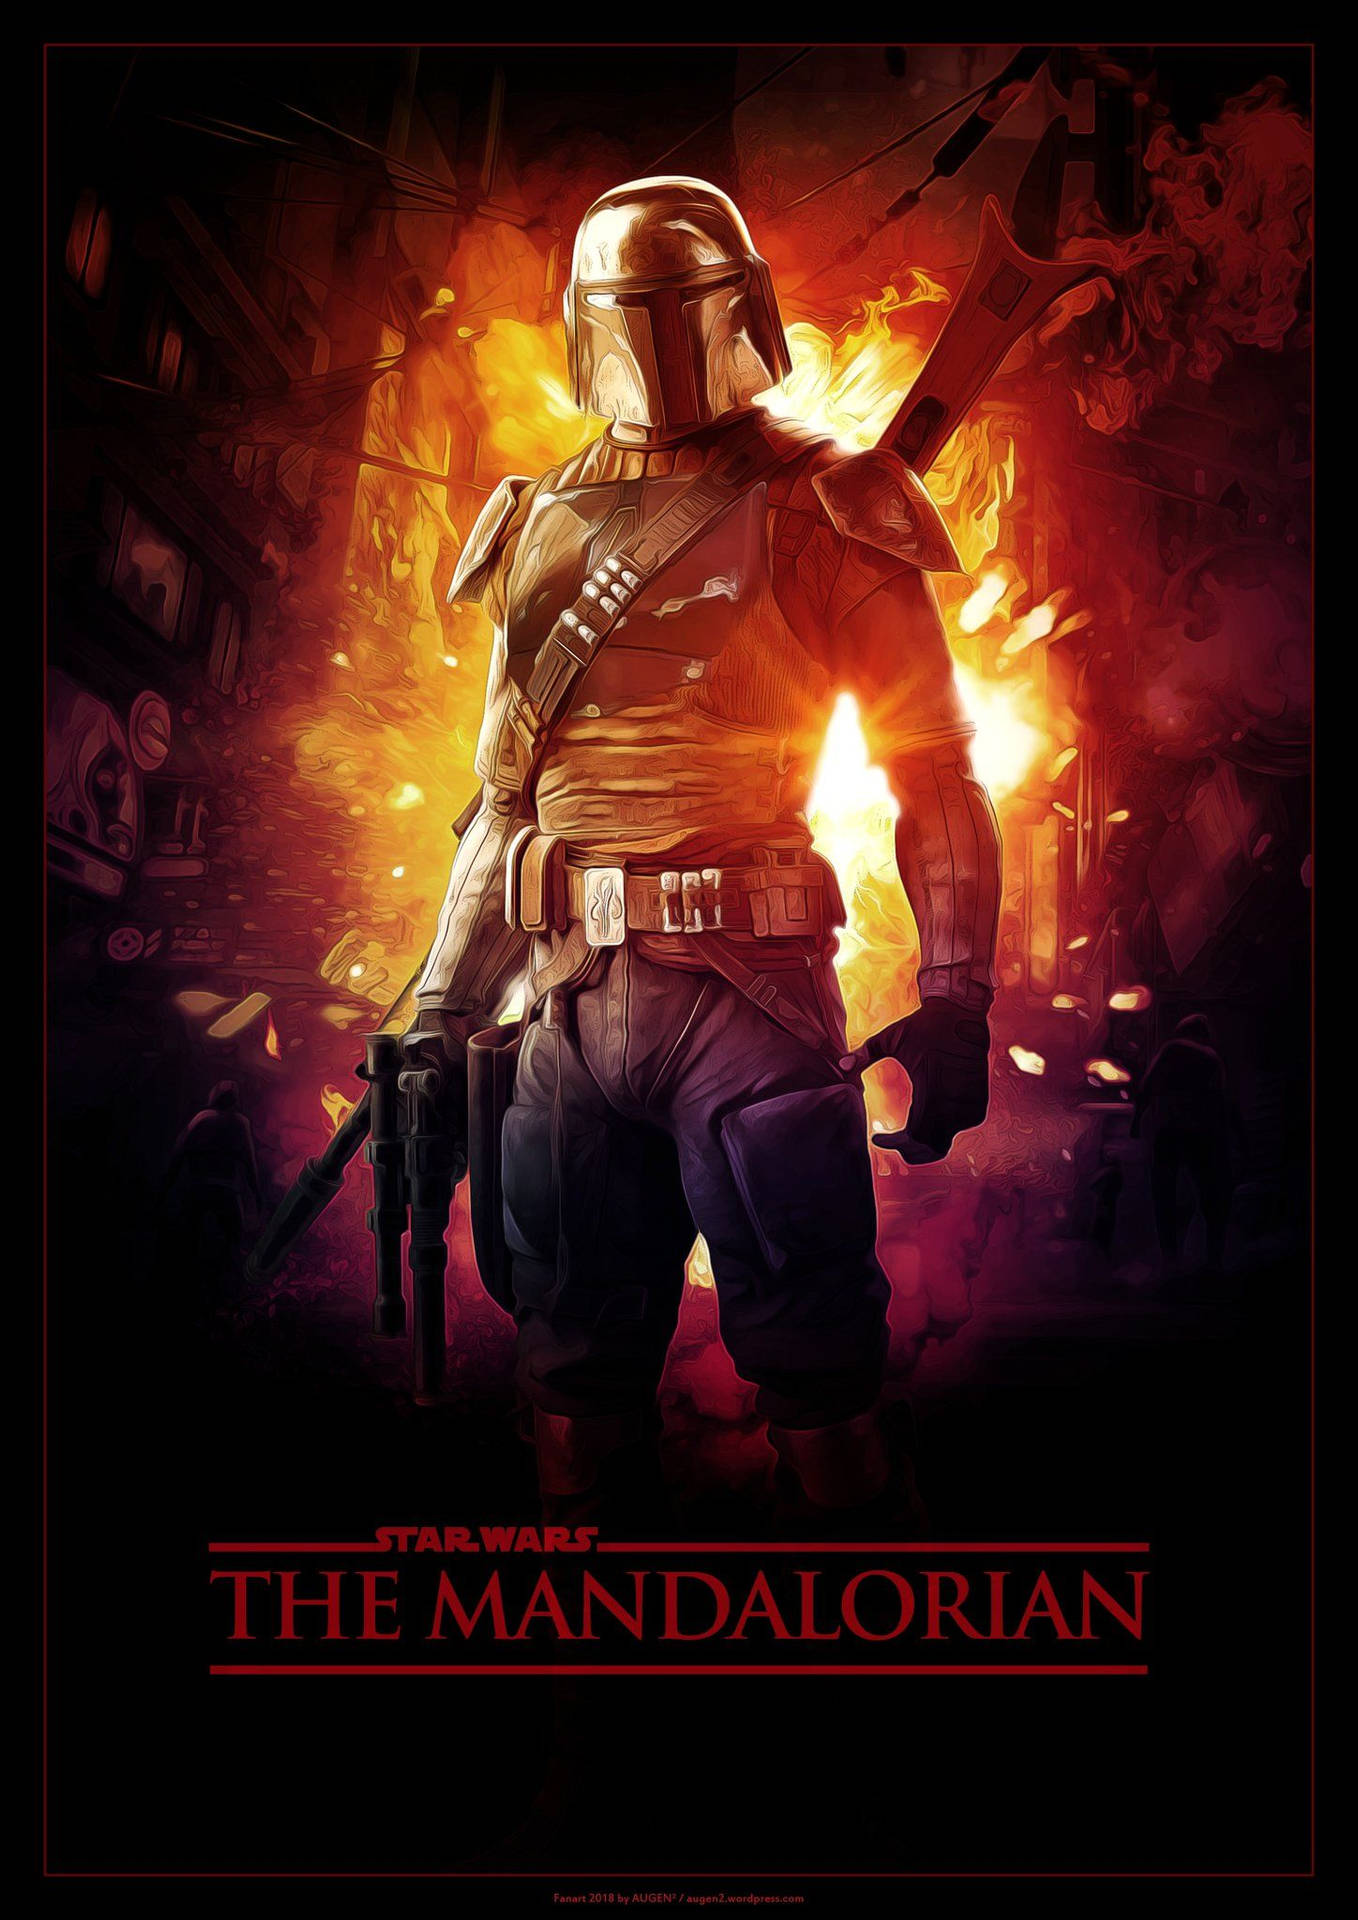 Free The Mandalorian Wallpaper Downloads, [100+] The Mandalorian Wallpapers  for FREE 